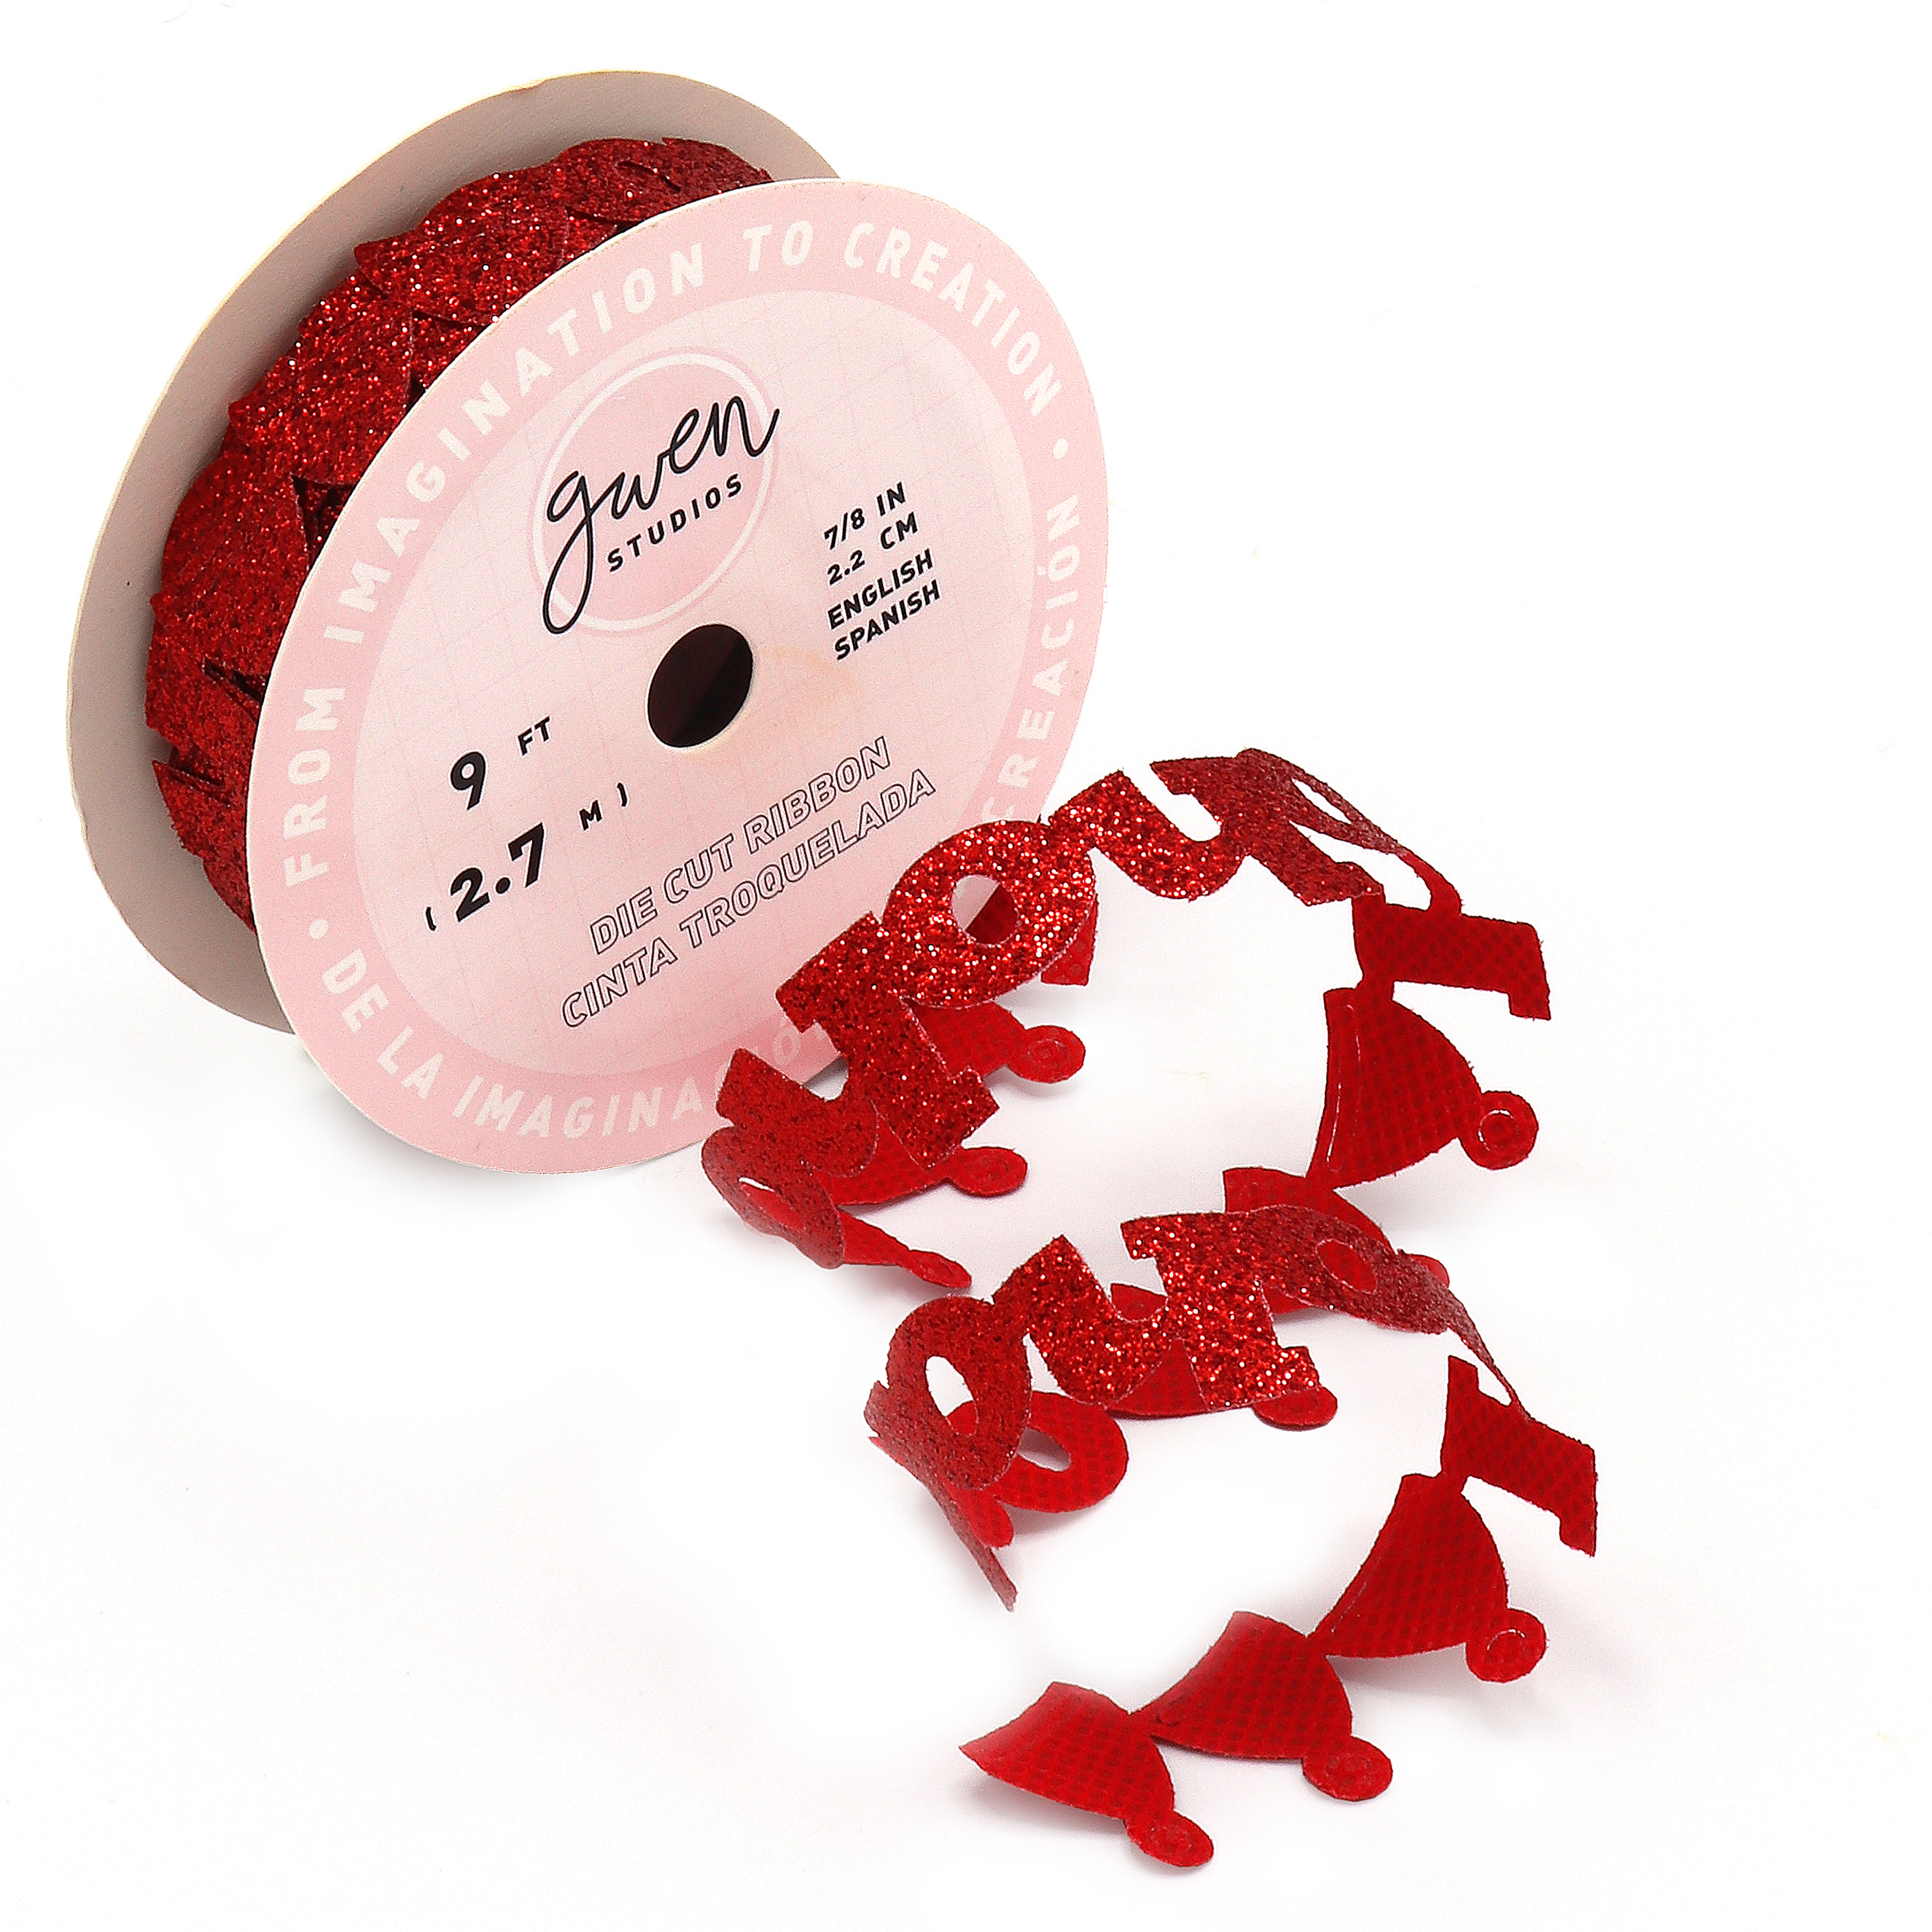 Die Cut Red Christmas Ribbon, Ho Ho Ho' Words, 7/8" x 12 Yards by Gwen Studios - image 2 of 3